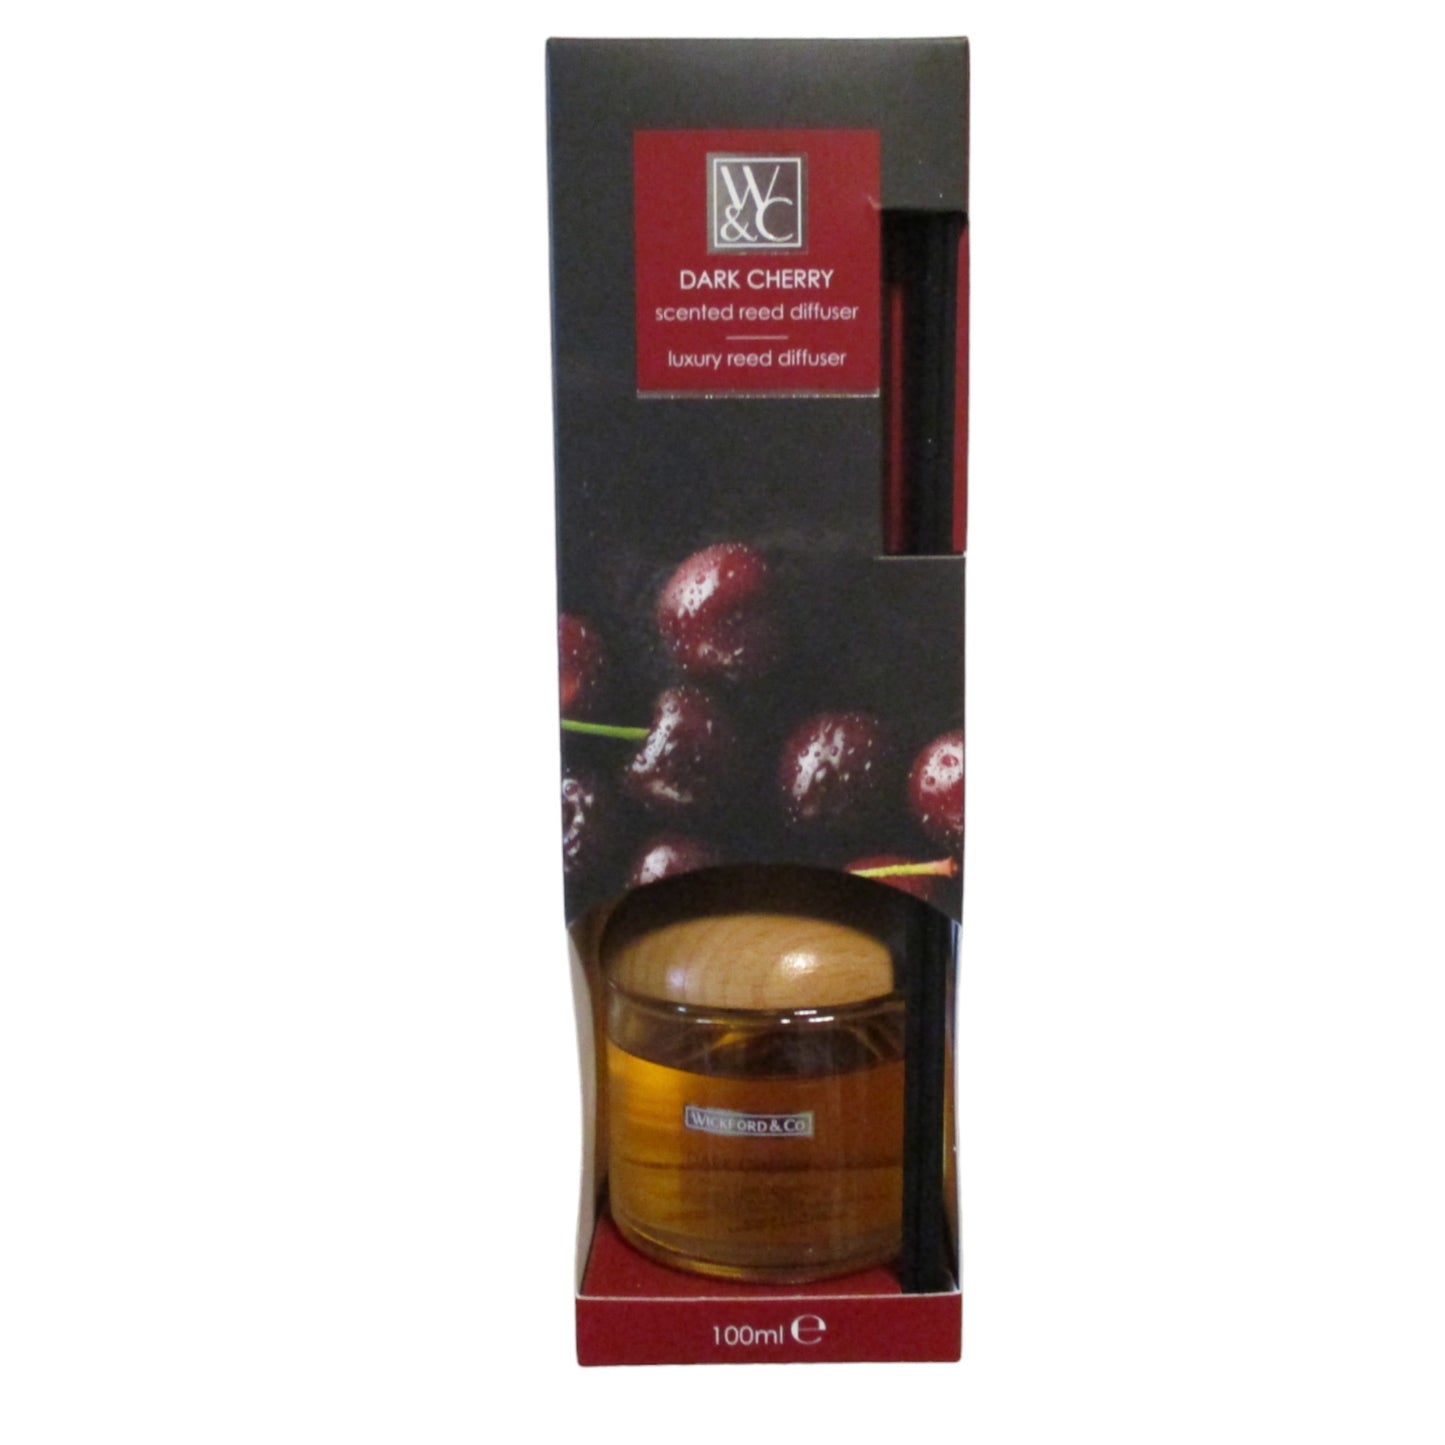 Wickford & Co - "Dark Cherry" -  Reed Diffuser Luxury Fragrance 100ml